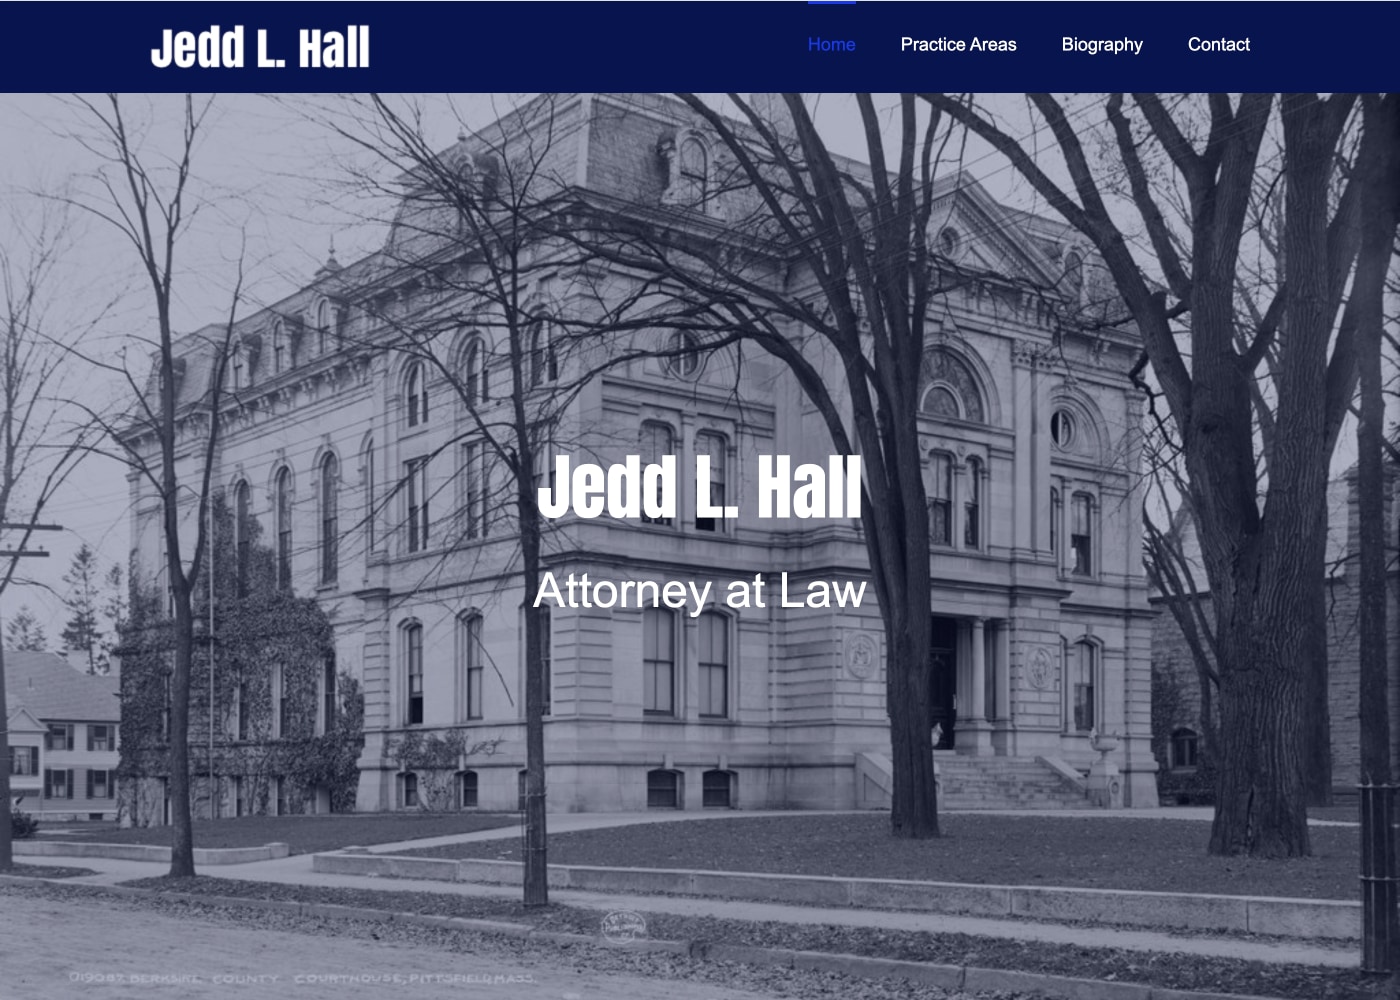 Screen shot of JeddHall.com